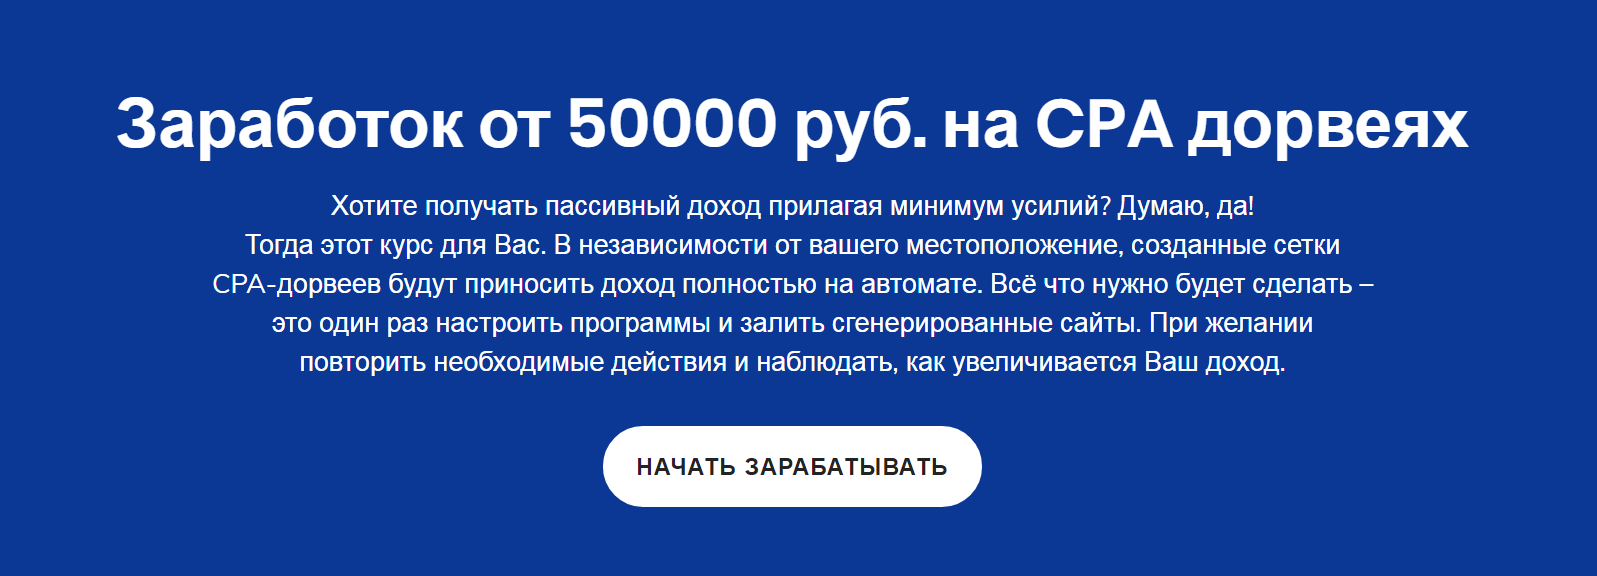 sergej-belousov-zarabotok-ot-50000-rub-na-cpa-dorvejax-2019-profi-png.786